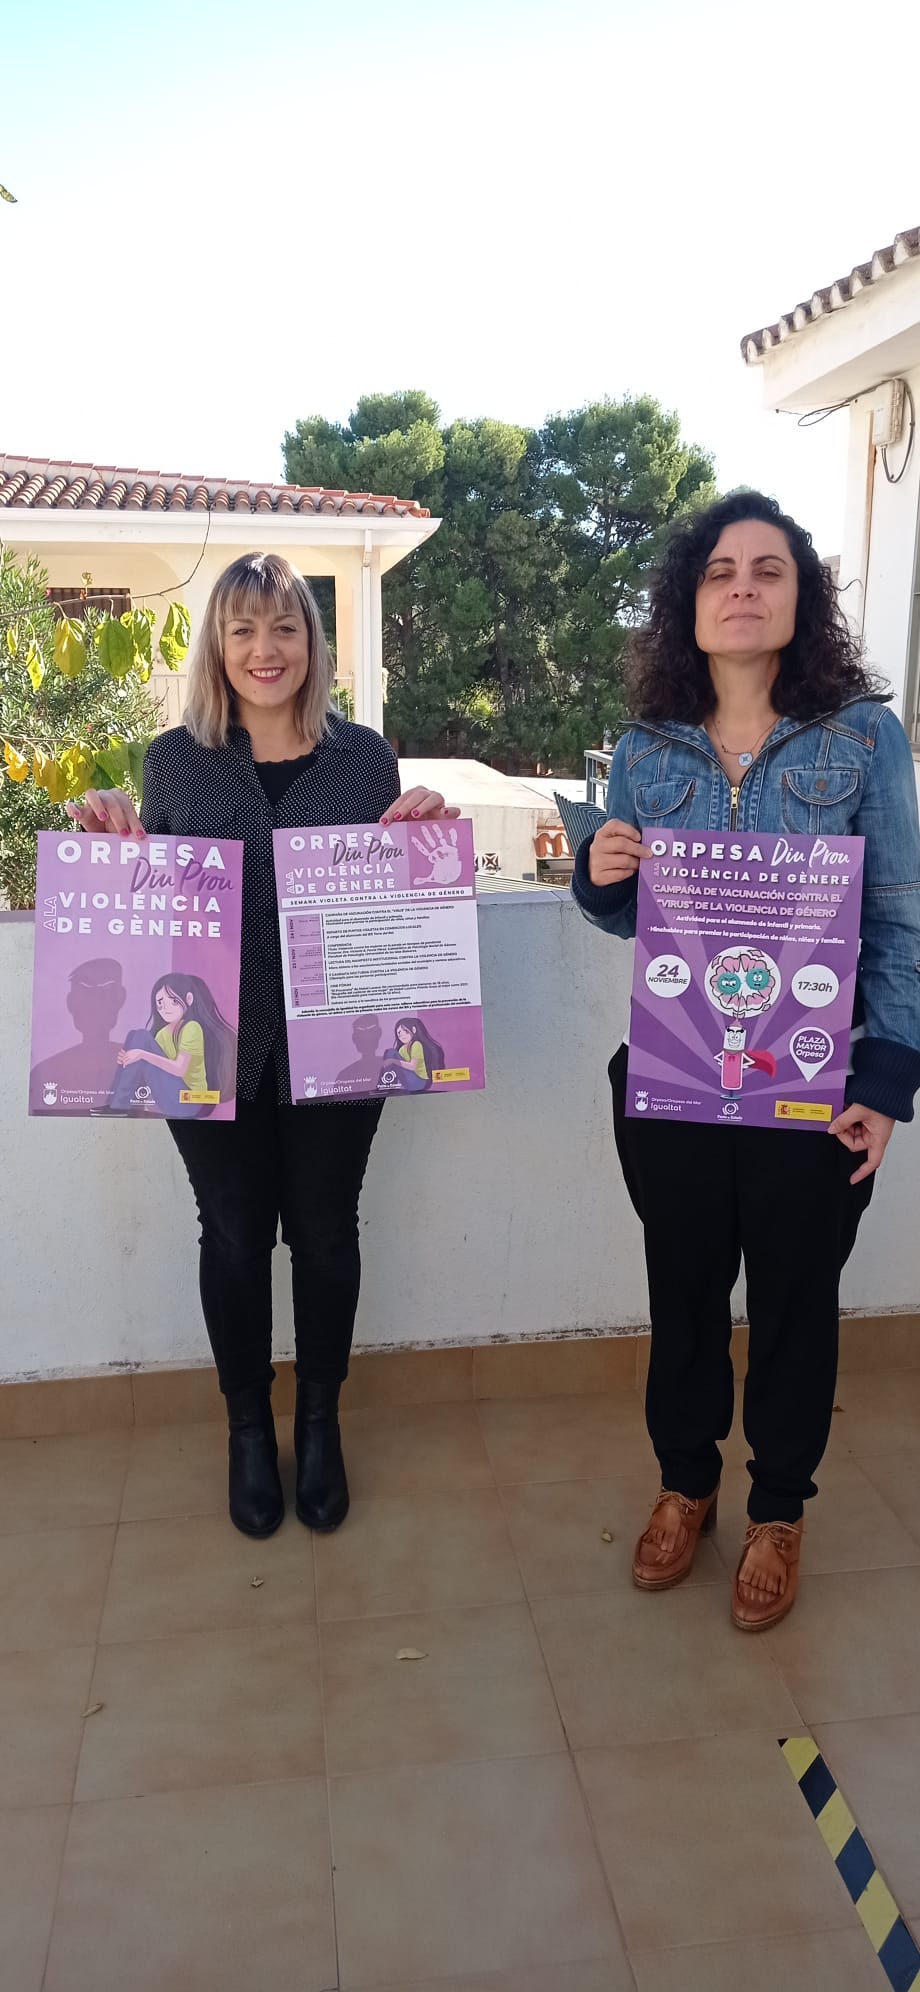 Entrevista a la concejala de Igualdad de Oropesa del Mar, Micaela Bermúdez